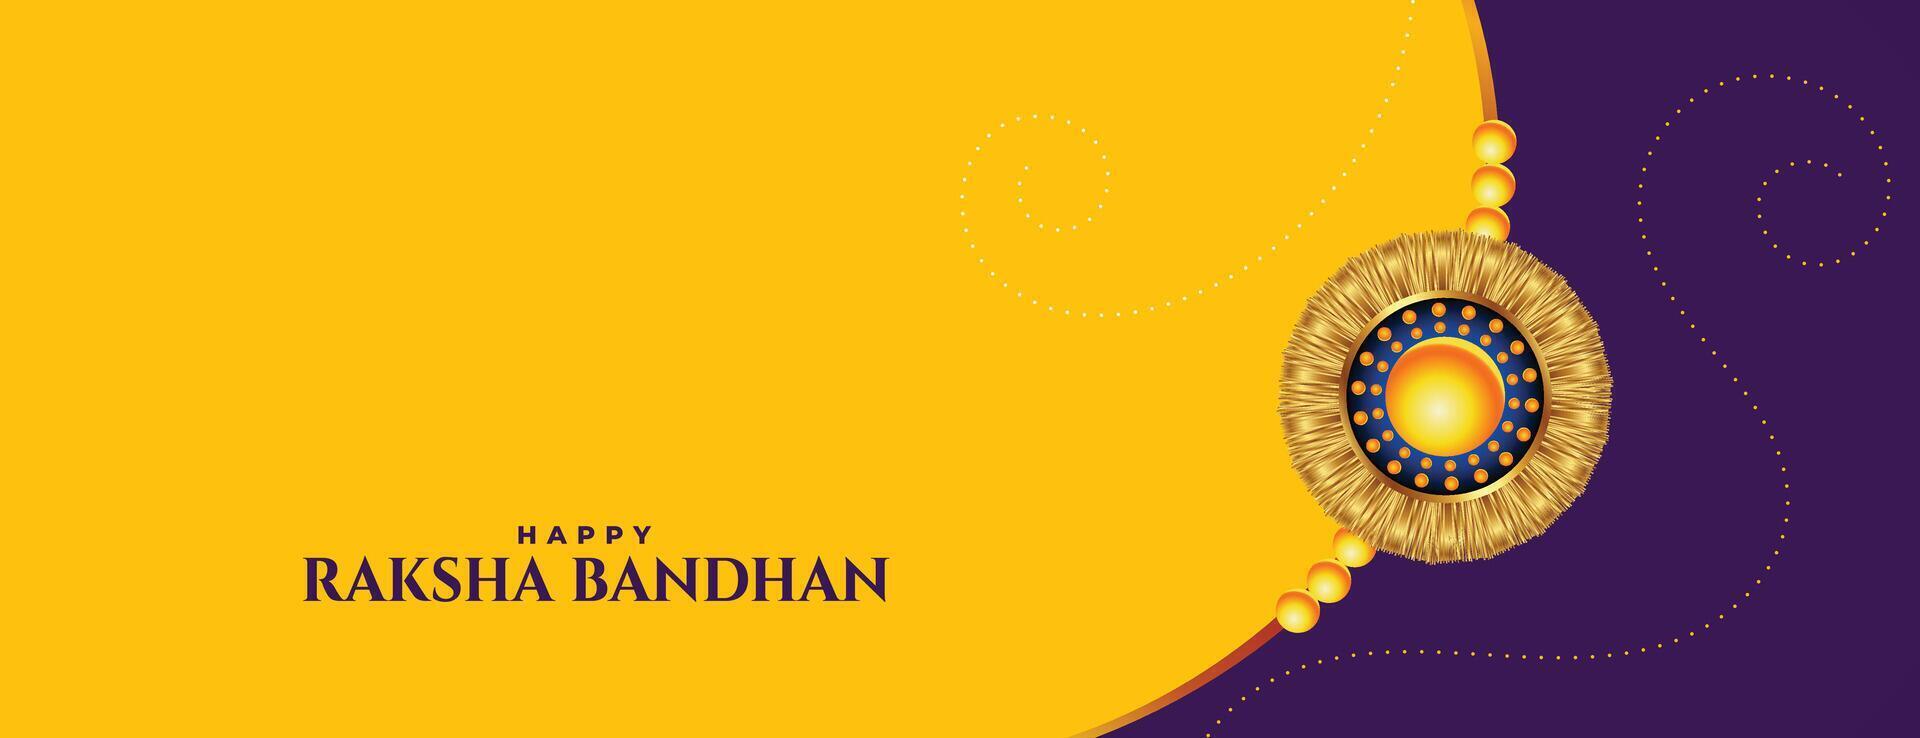 raksha Bandhan amarillo bandera con rakhi diseño vector